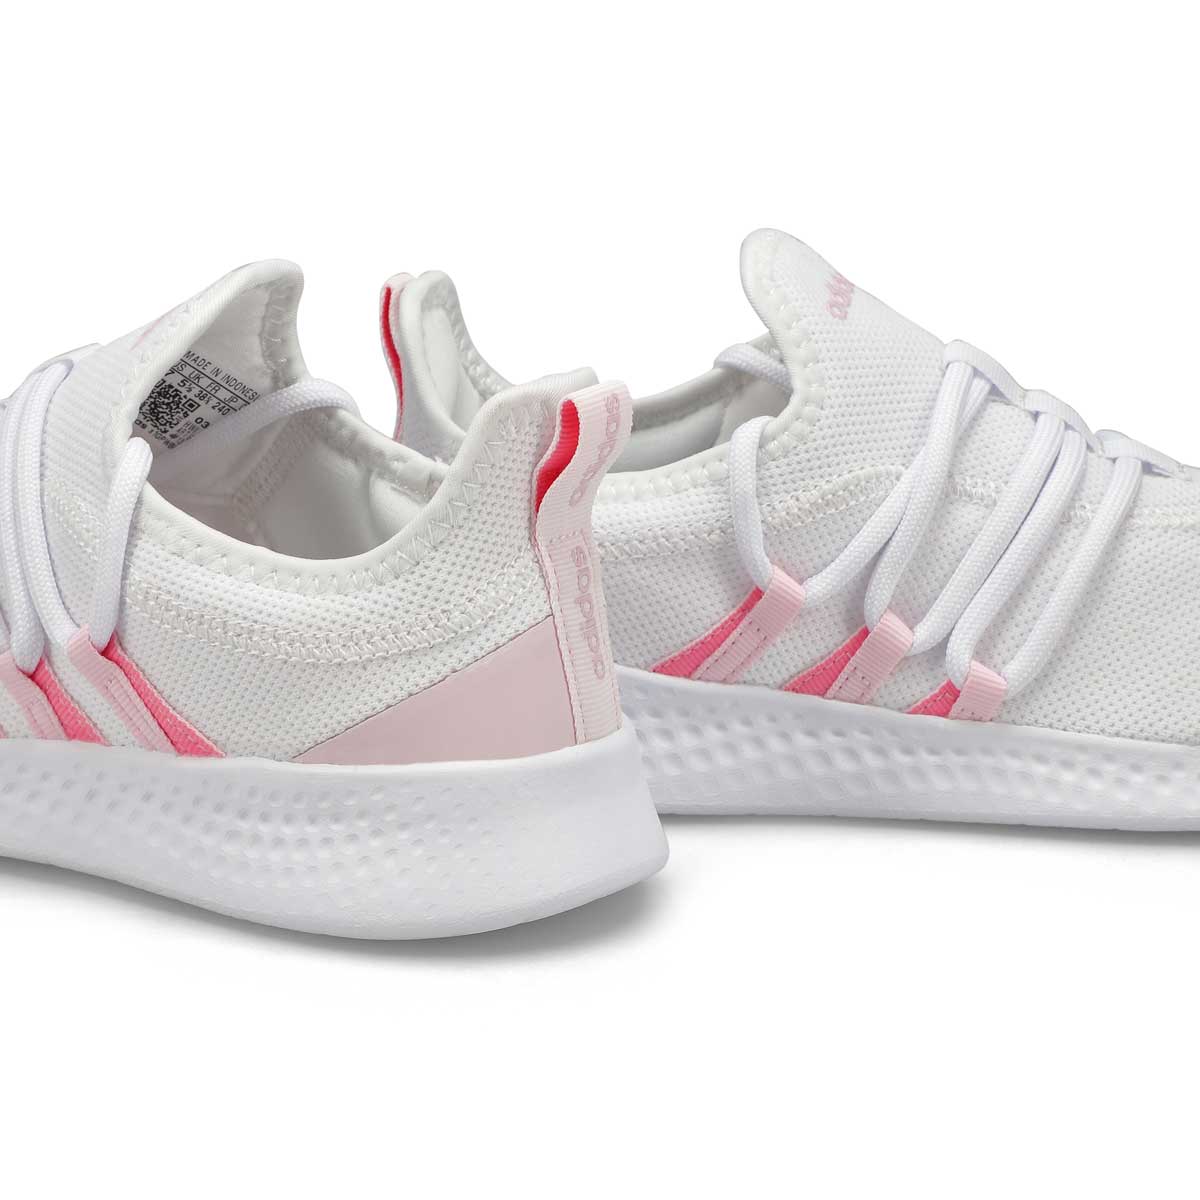 adidas Puremotion Adapt Shoes - White | adidas Canada